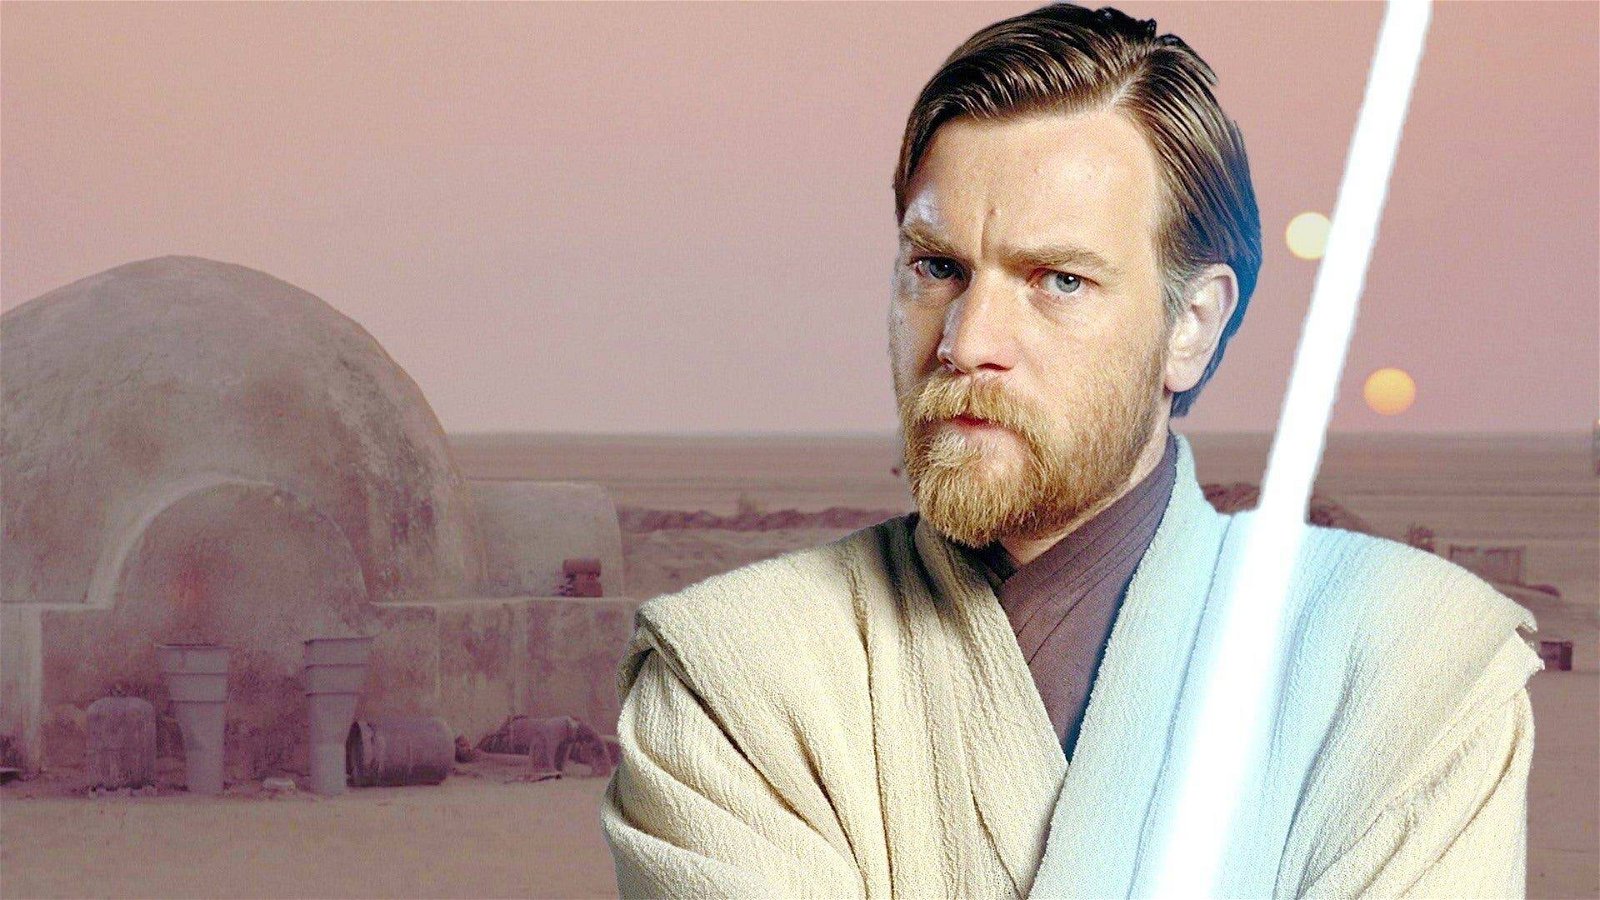 Immagine di Obi-Wan Kenobi: Ewan McGregor pronto a tornare come Kenobi?